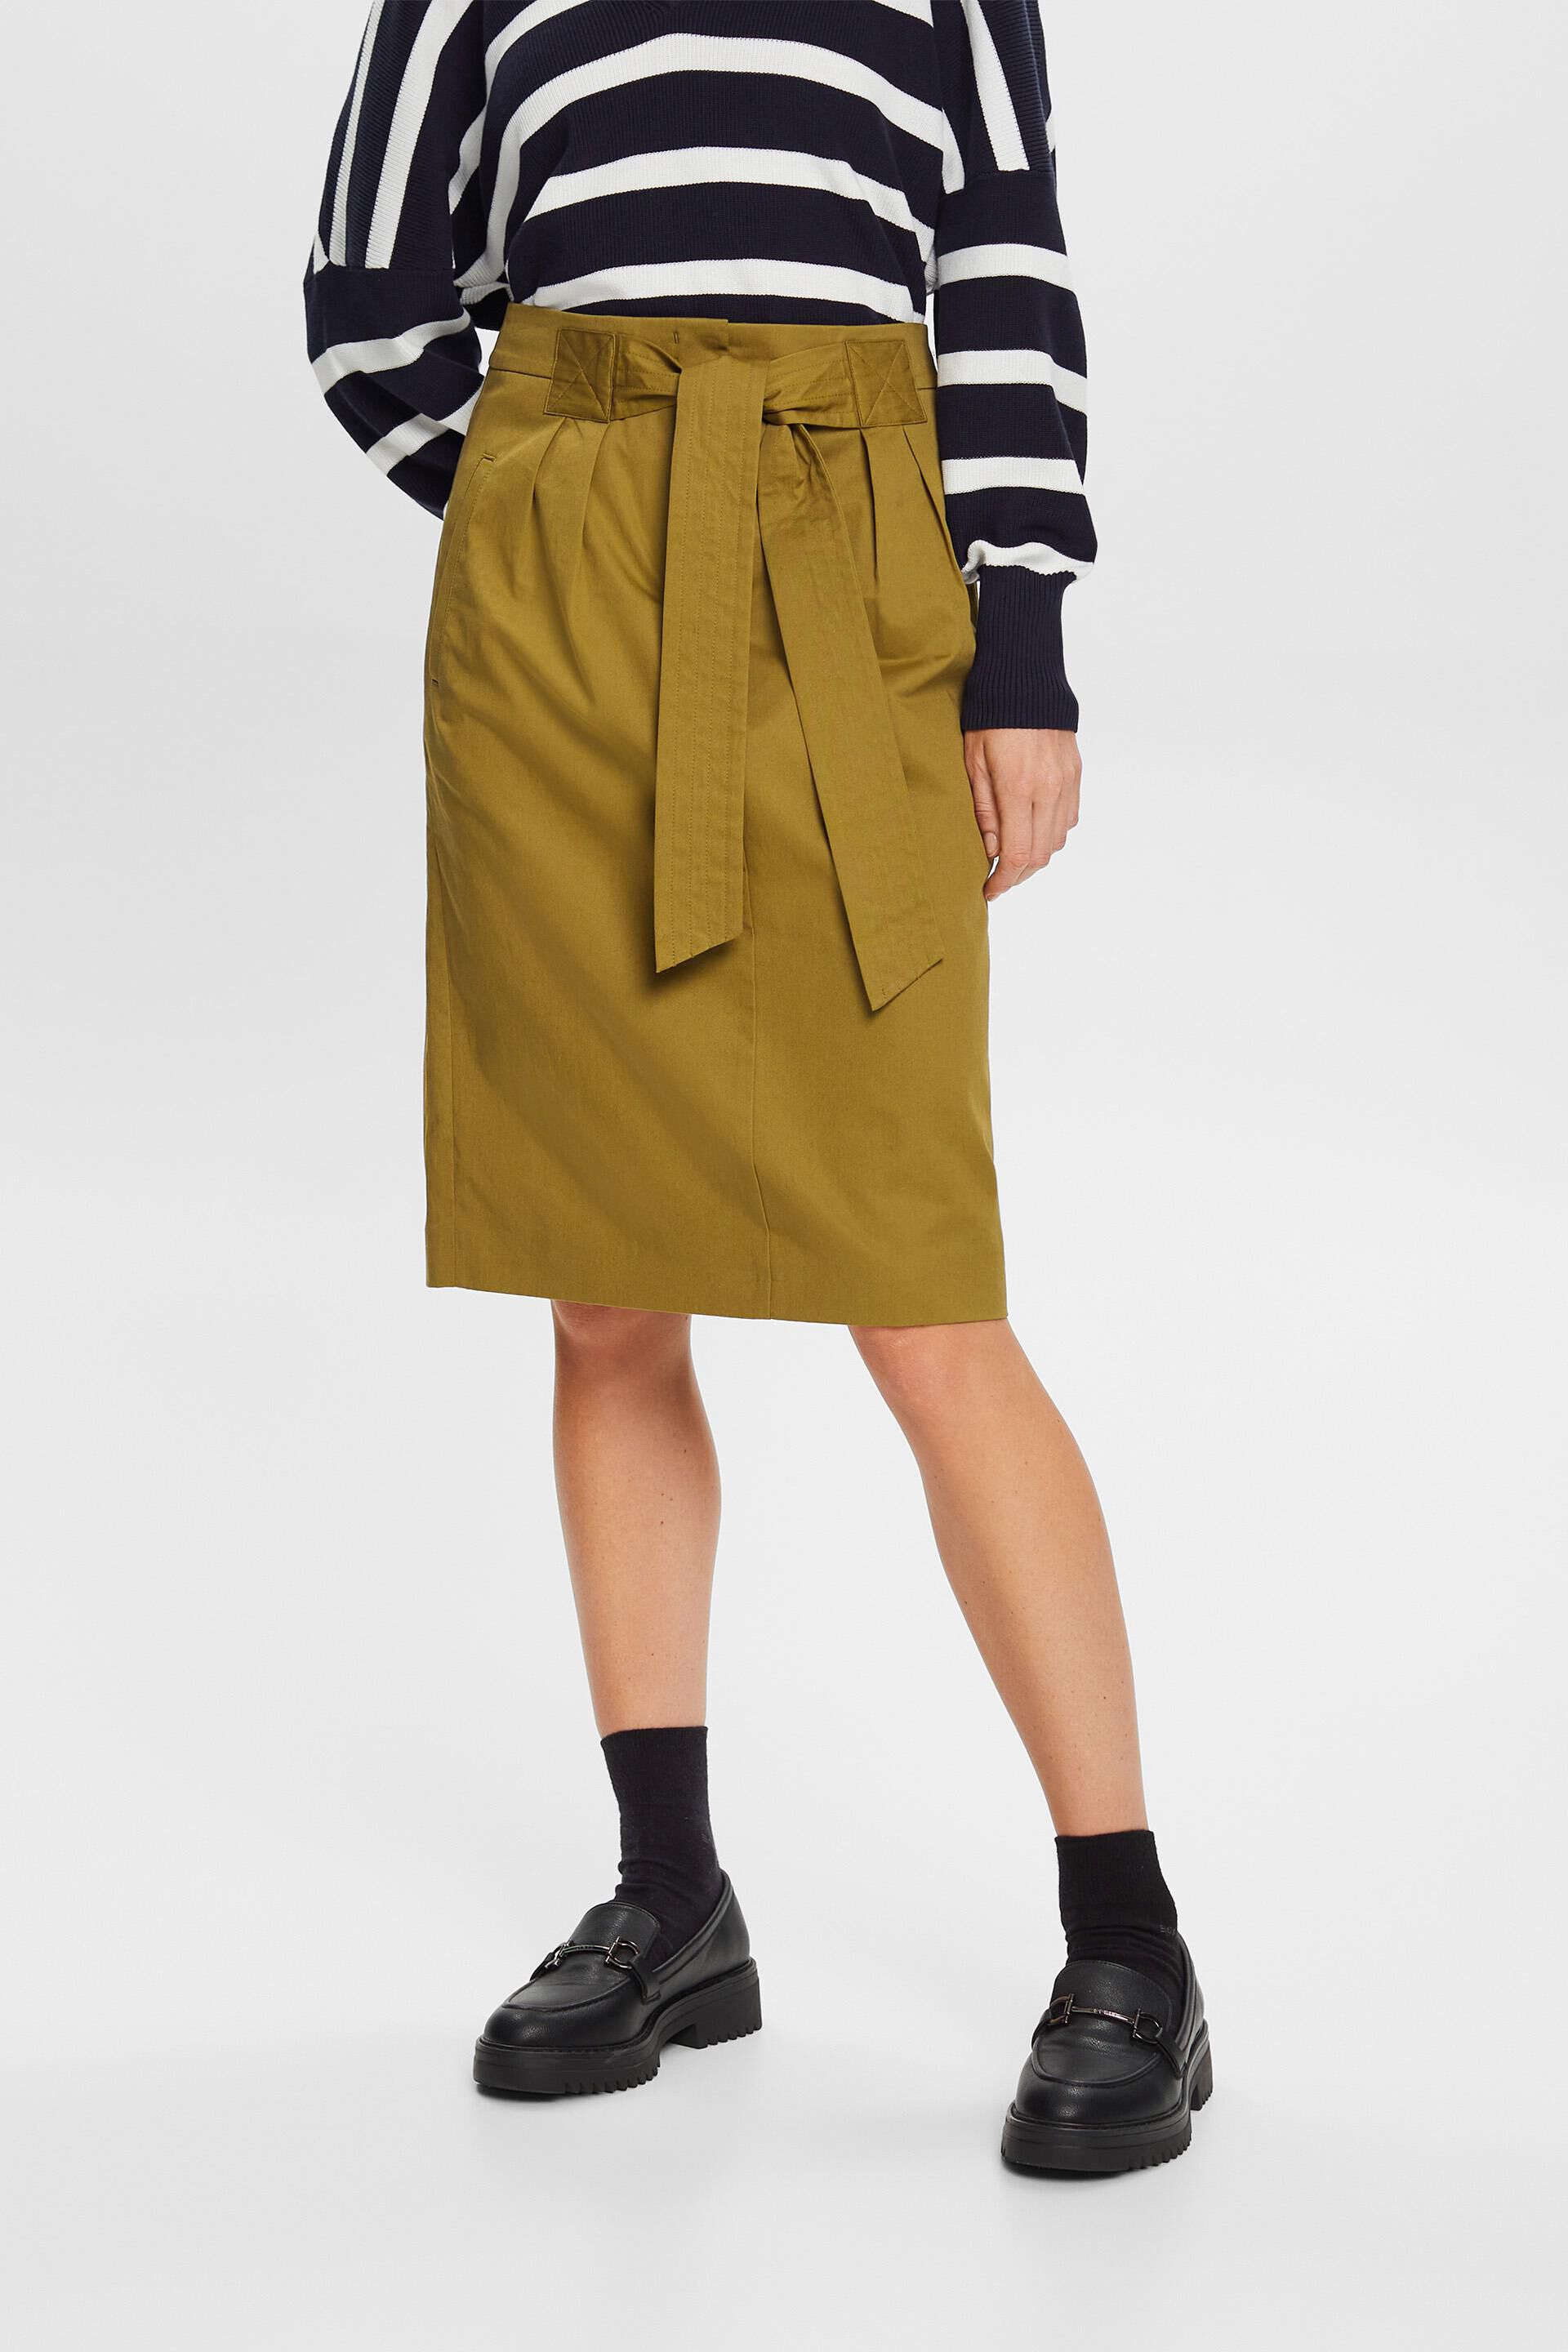 Belted knee length skirt, 100% cotton